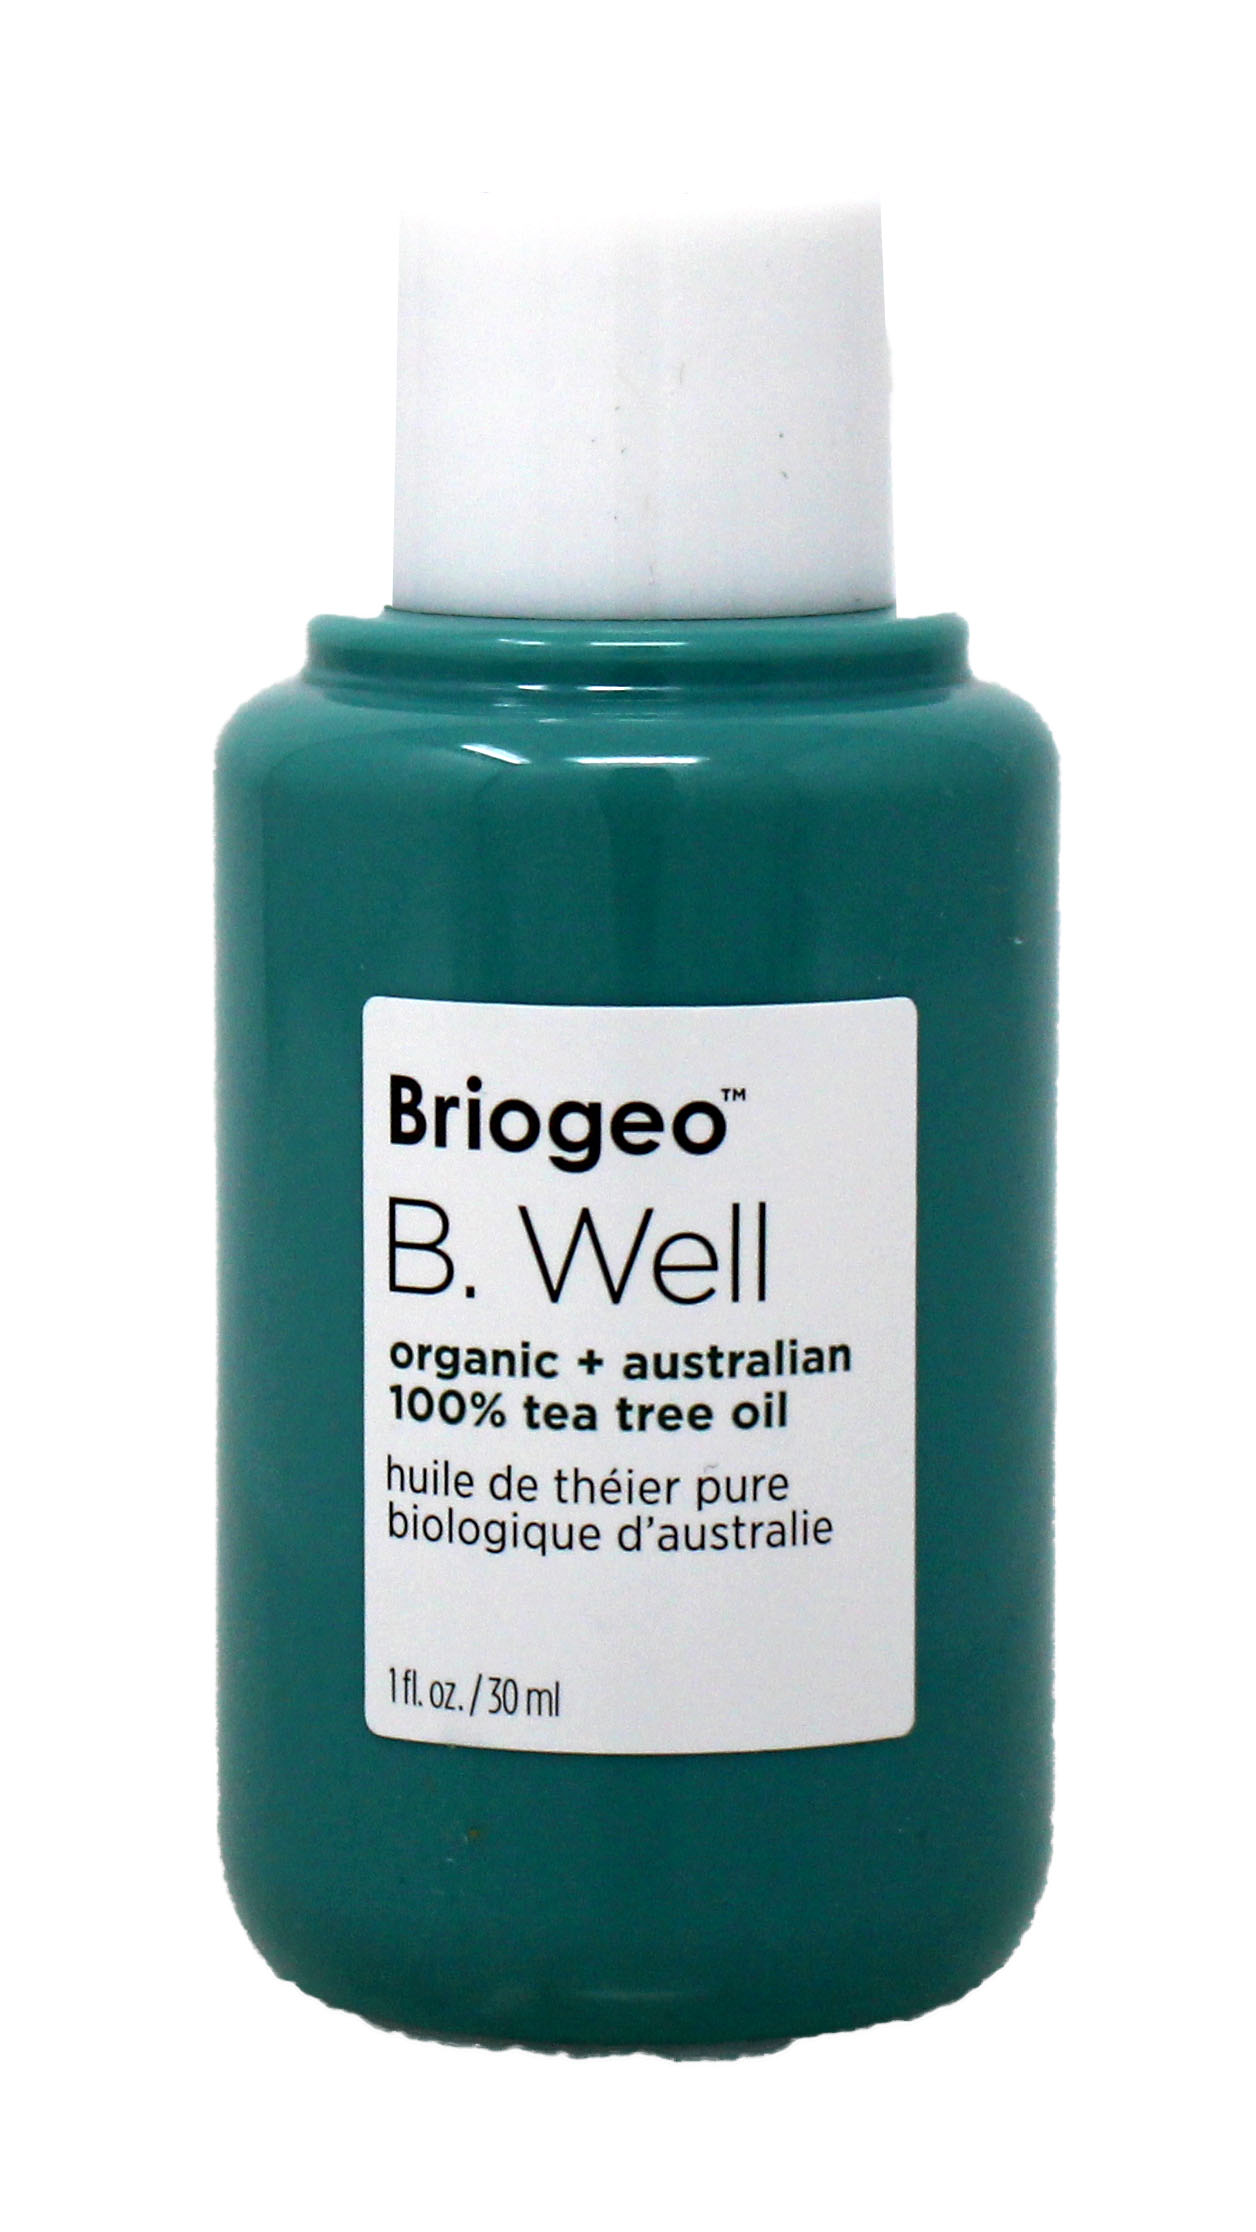 Briogeo B. Well Organic + Australian 100% Tea Tree Oil 1 Ounce - image 1 of 2